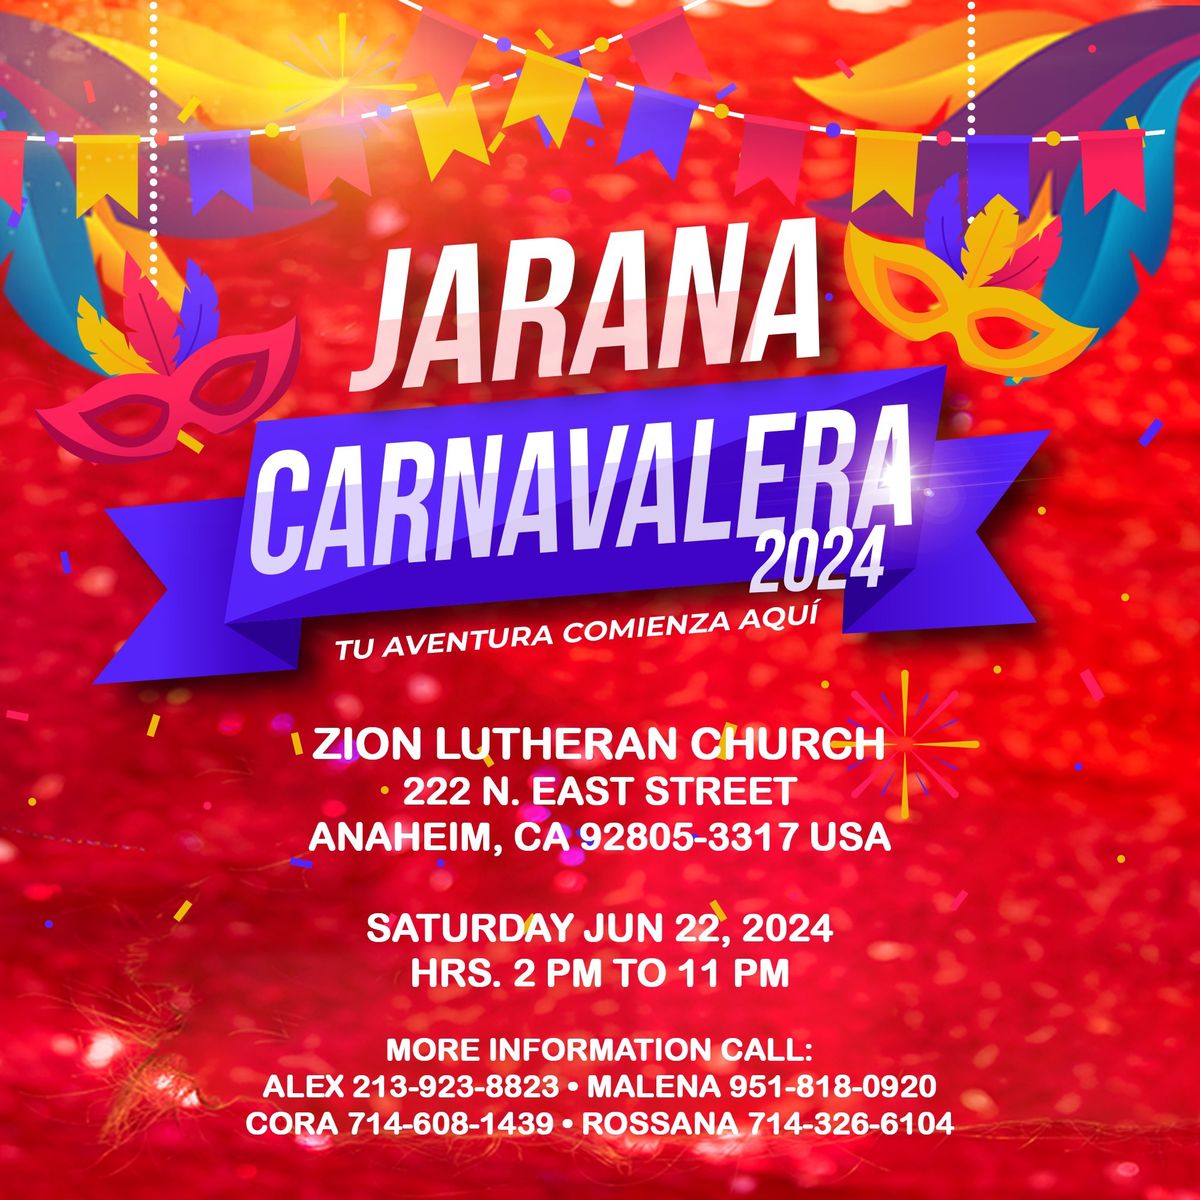 Jarana Carnavalera 2024